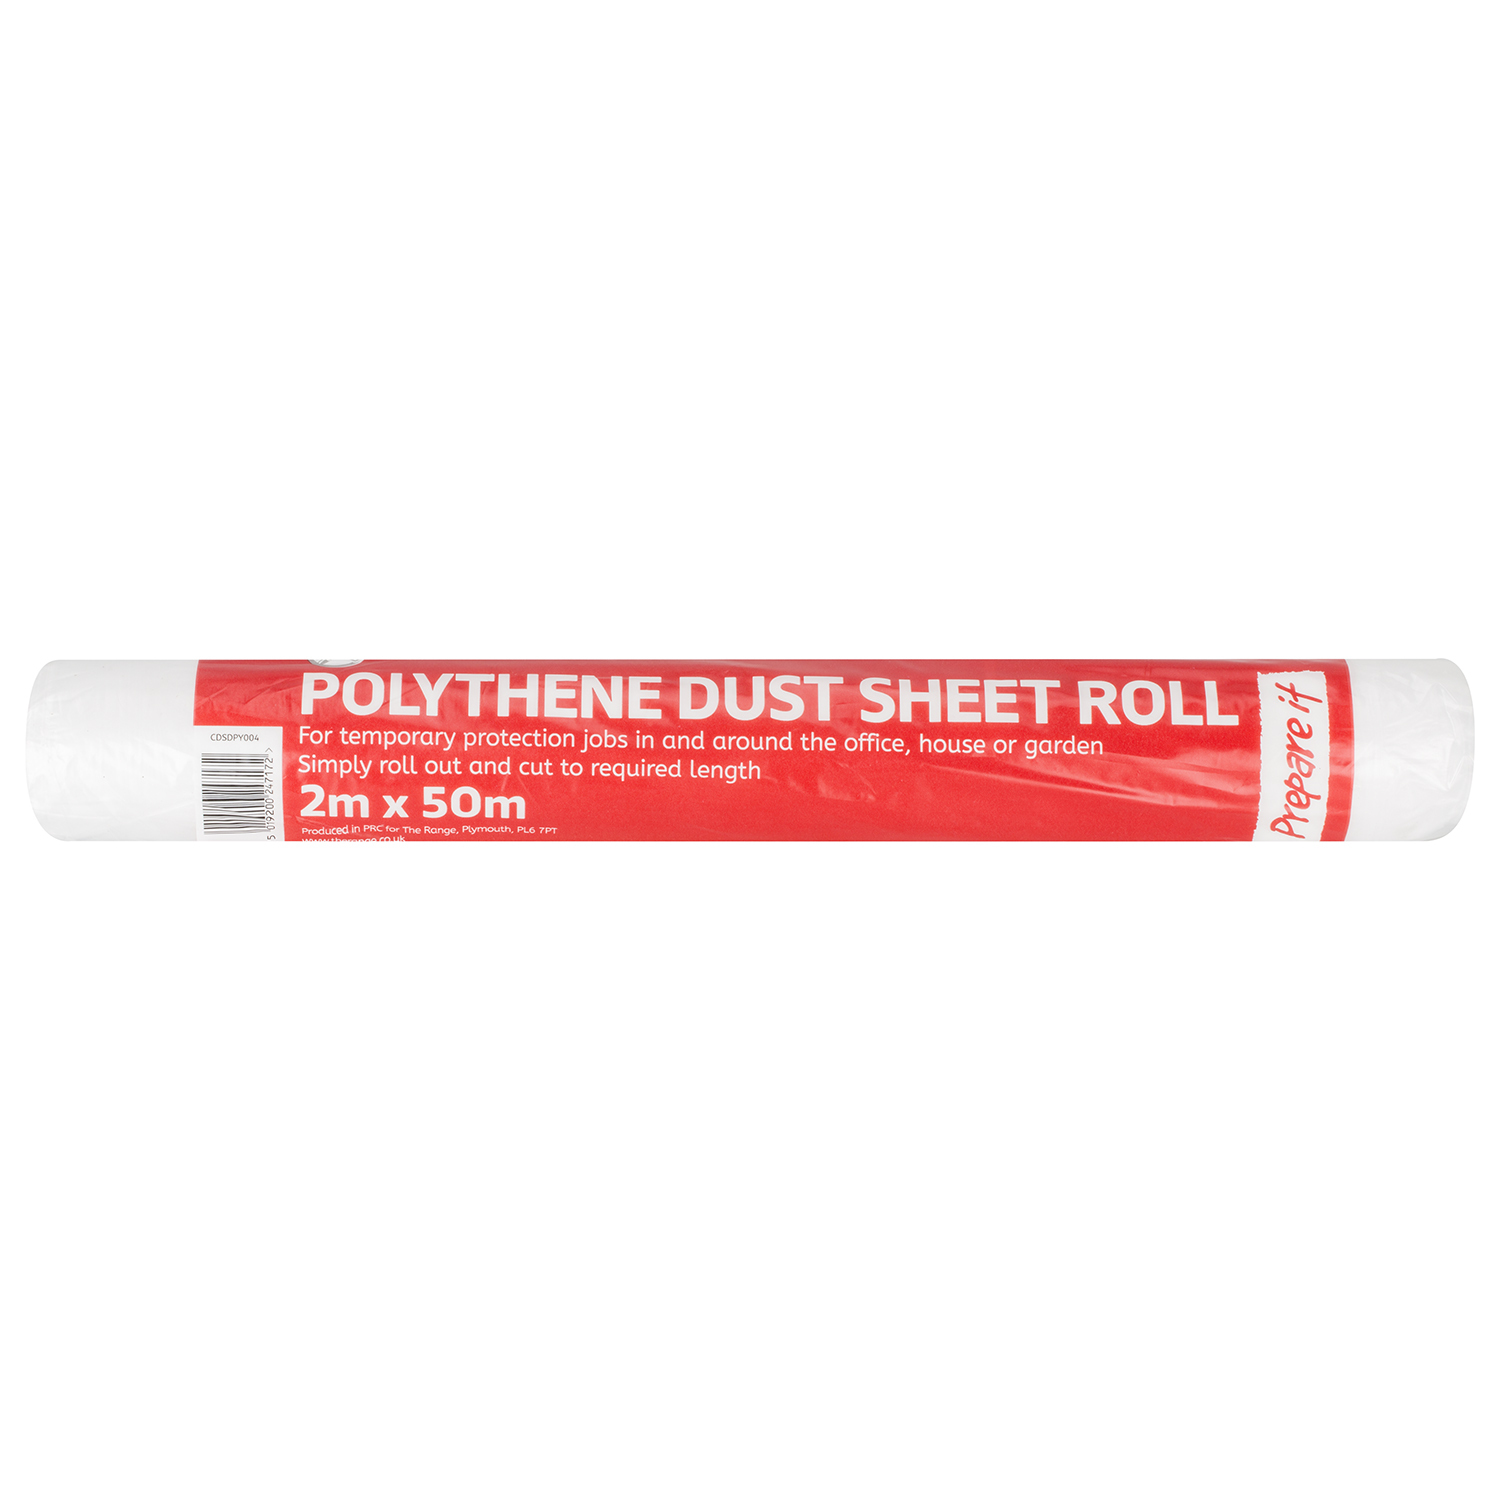 Polythene Dust Sheet Roll Image